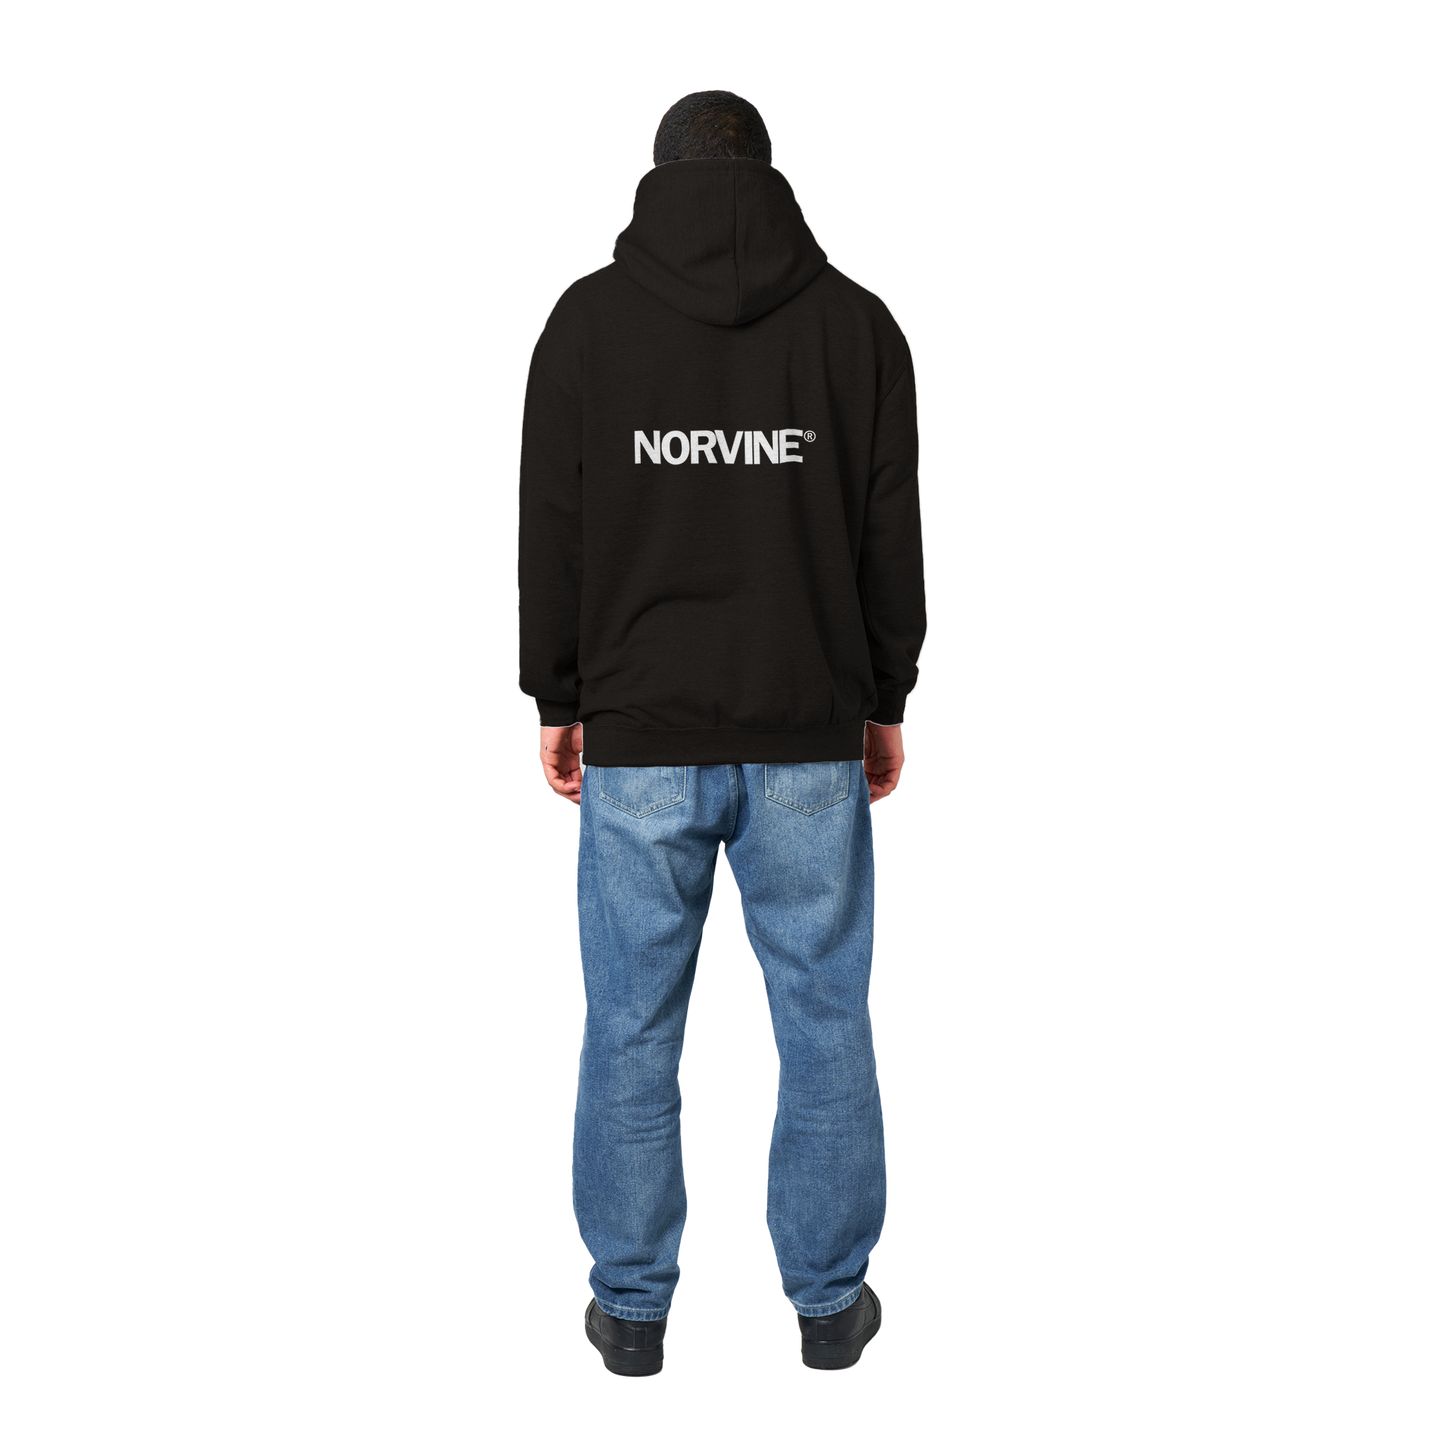 Norvine Basic Logos Hoodie